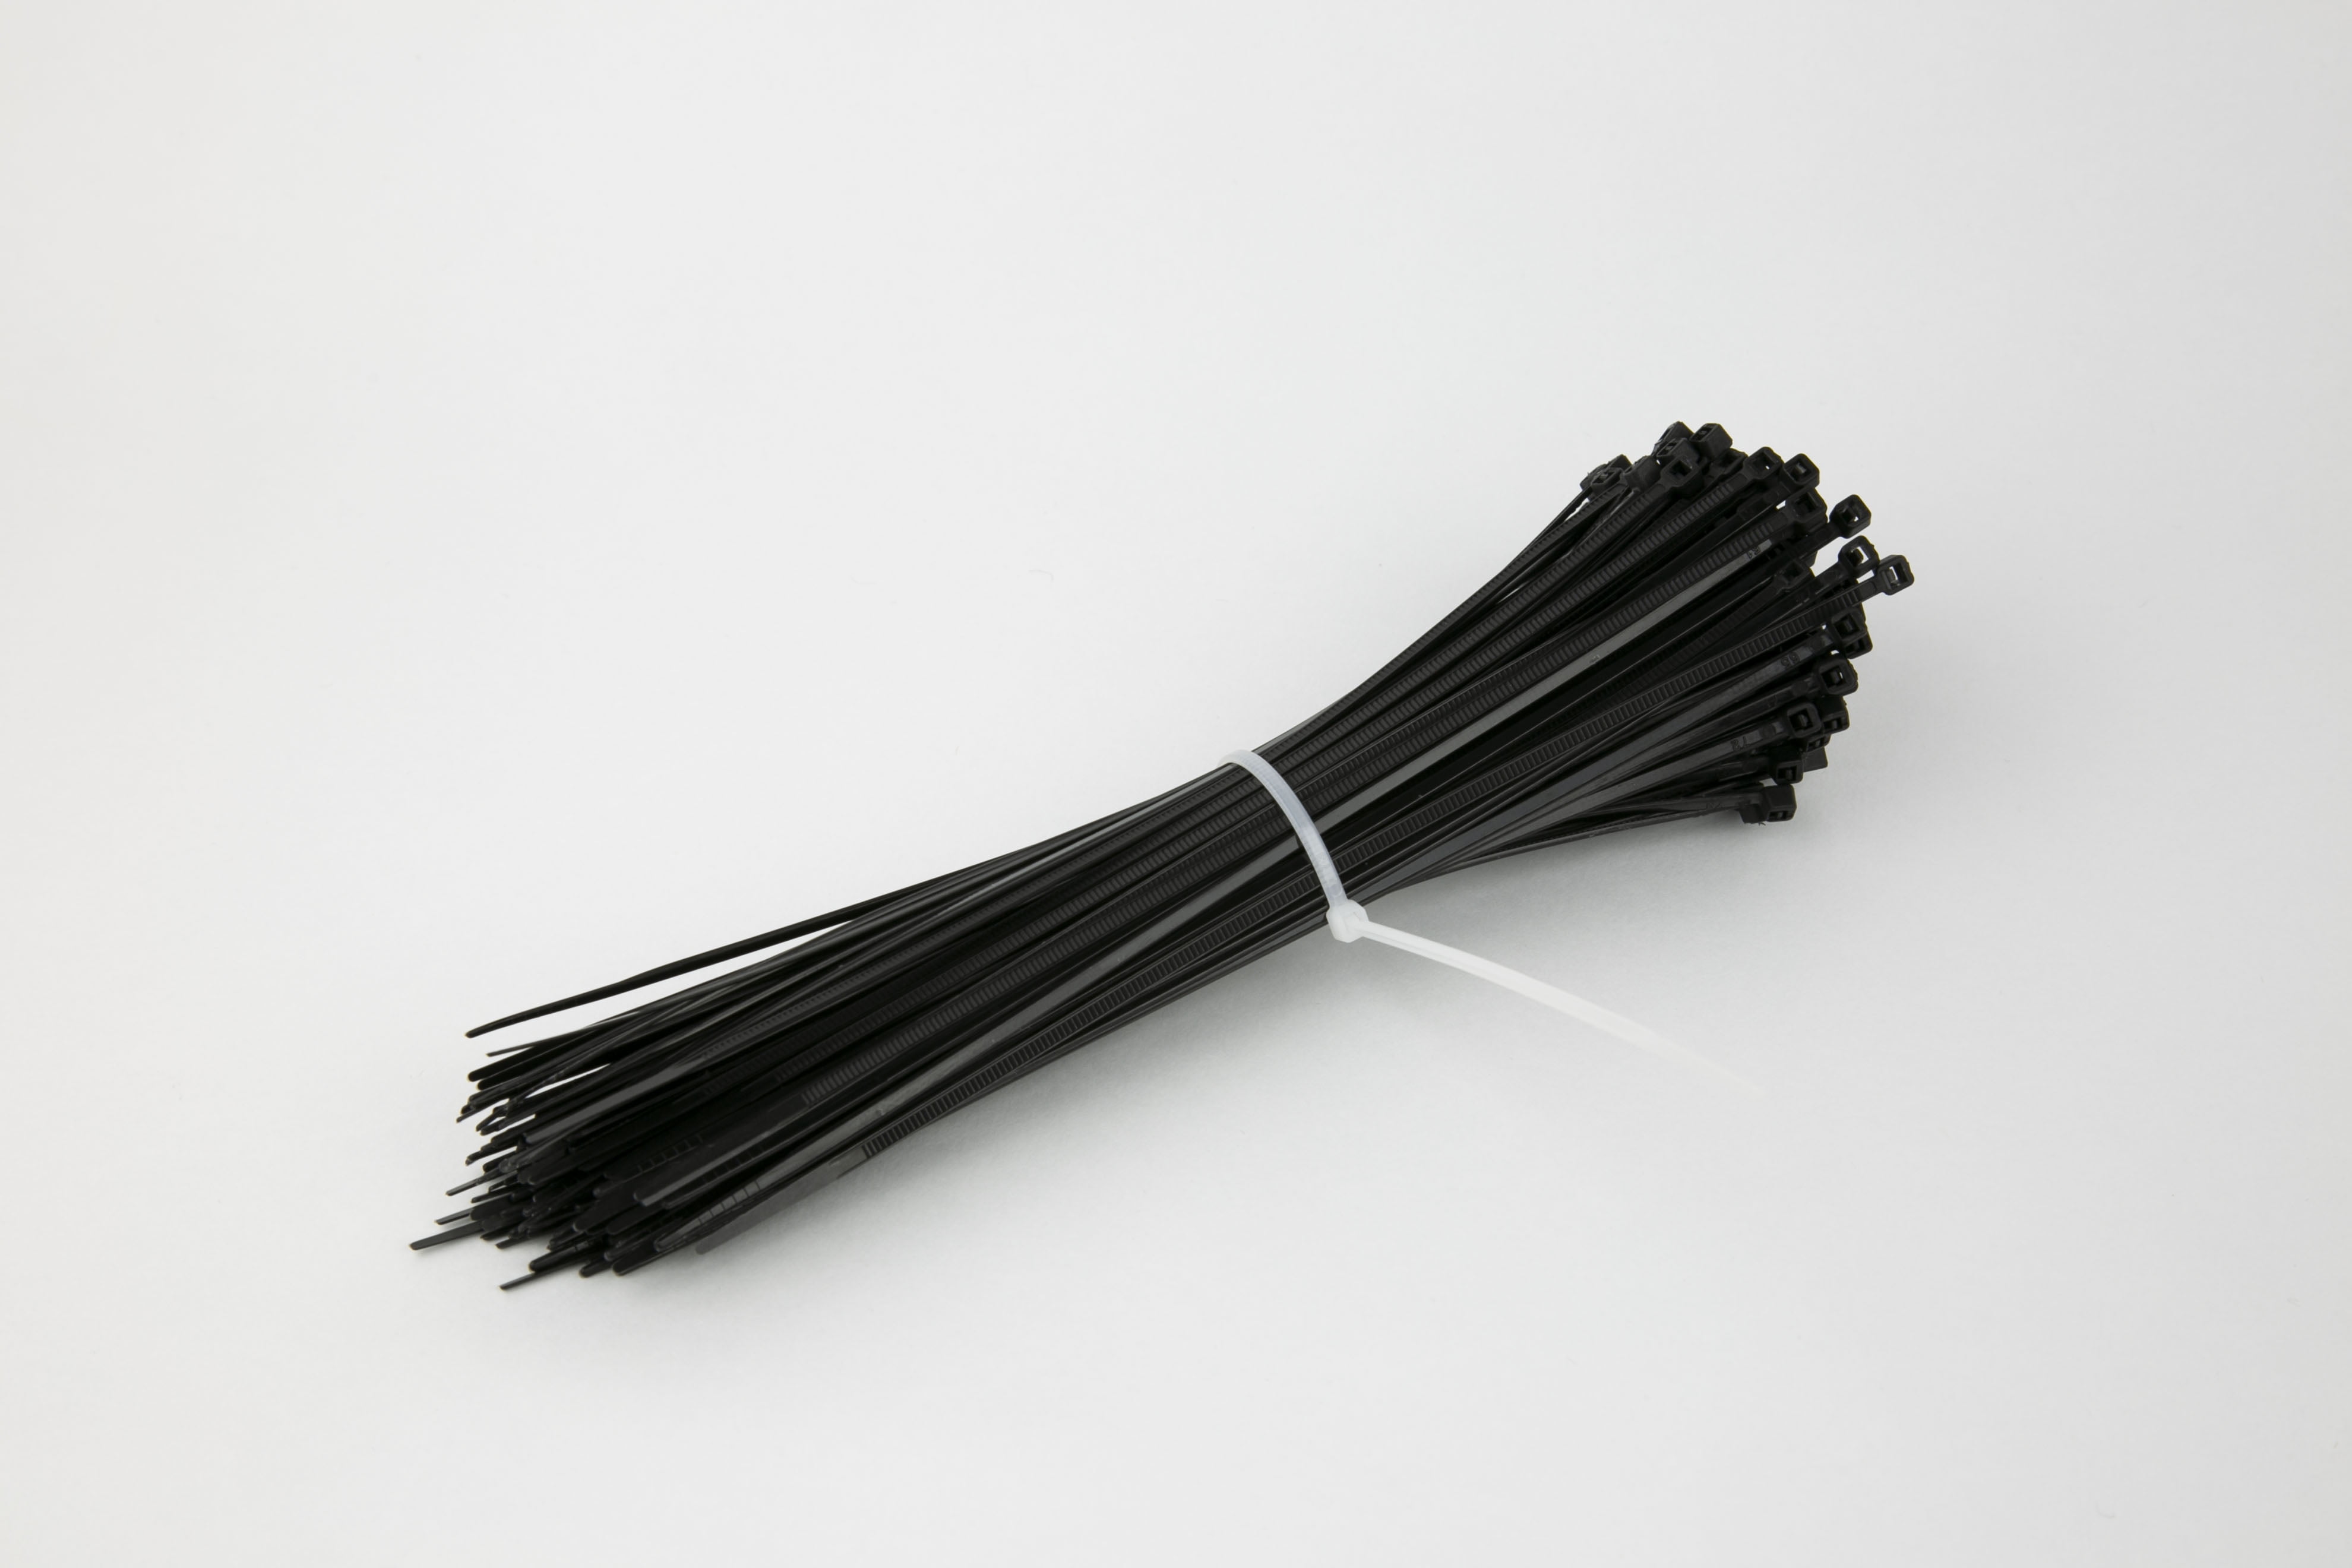 8 Inch Nylon Wire Zip Ties Fastener Cord Wrap Strap Self-Locking Cable Organizer 